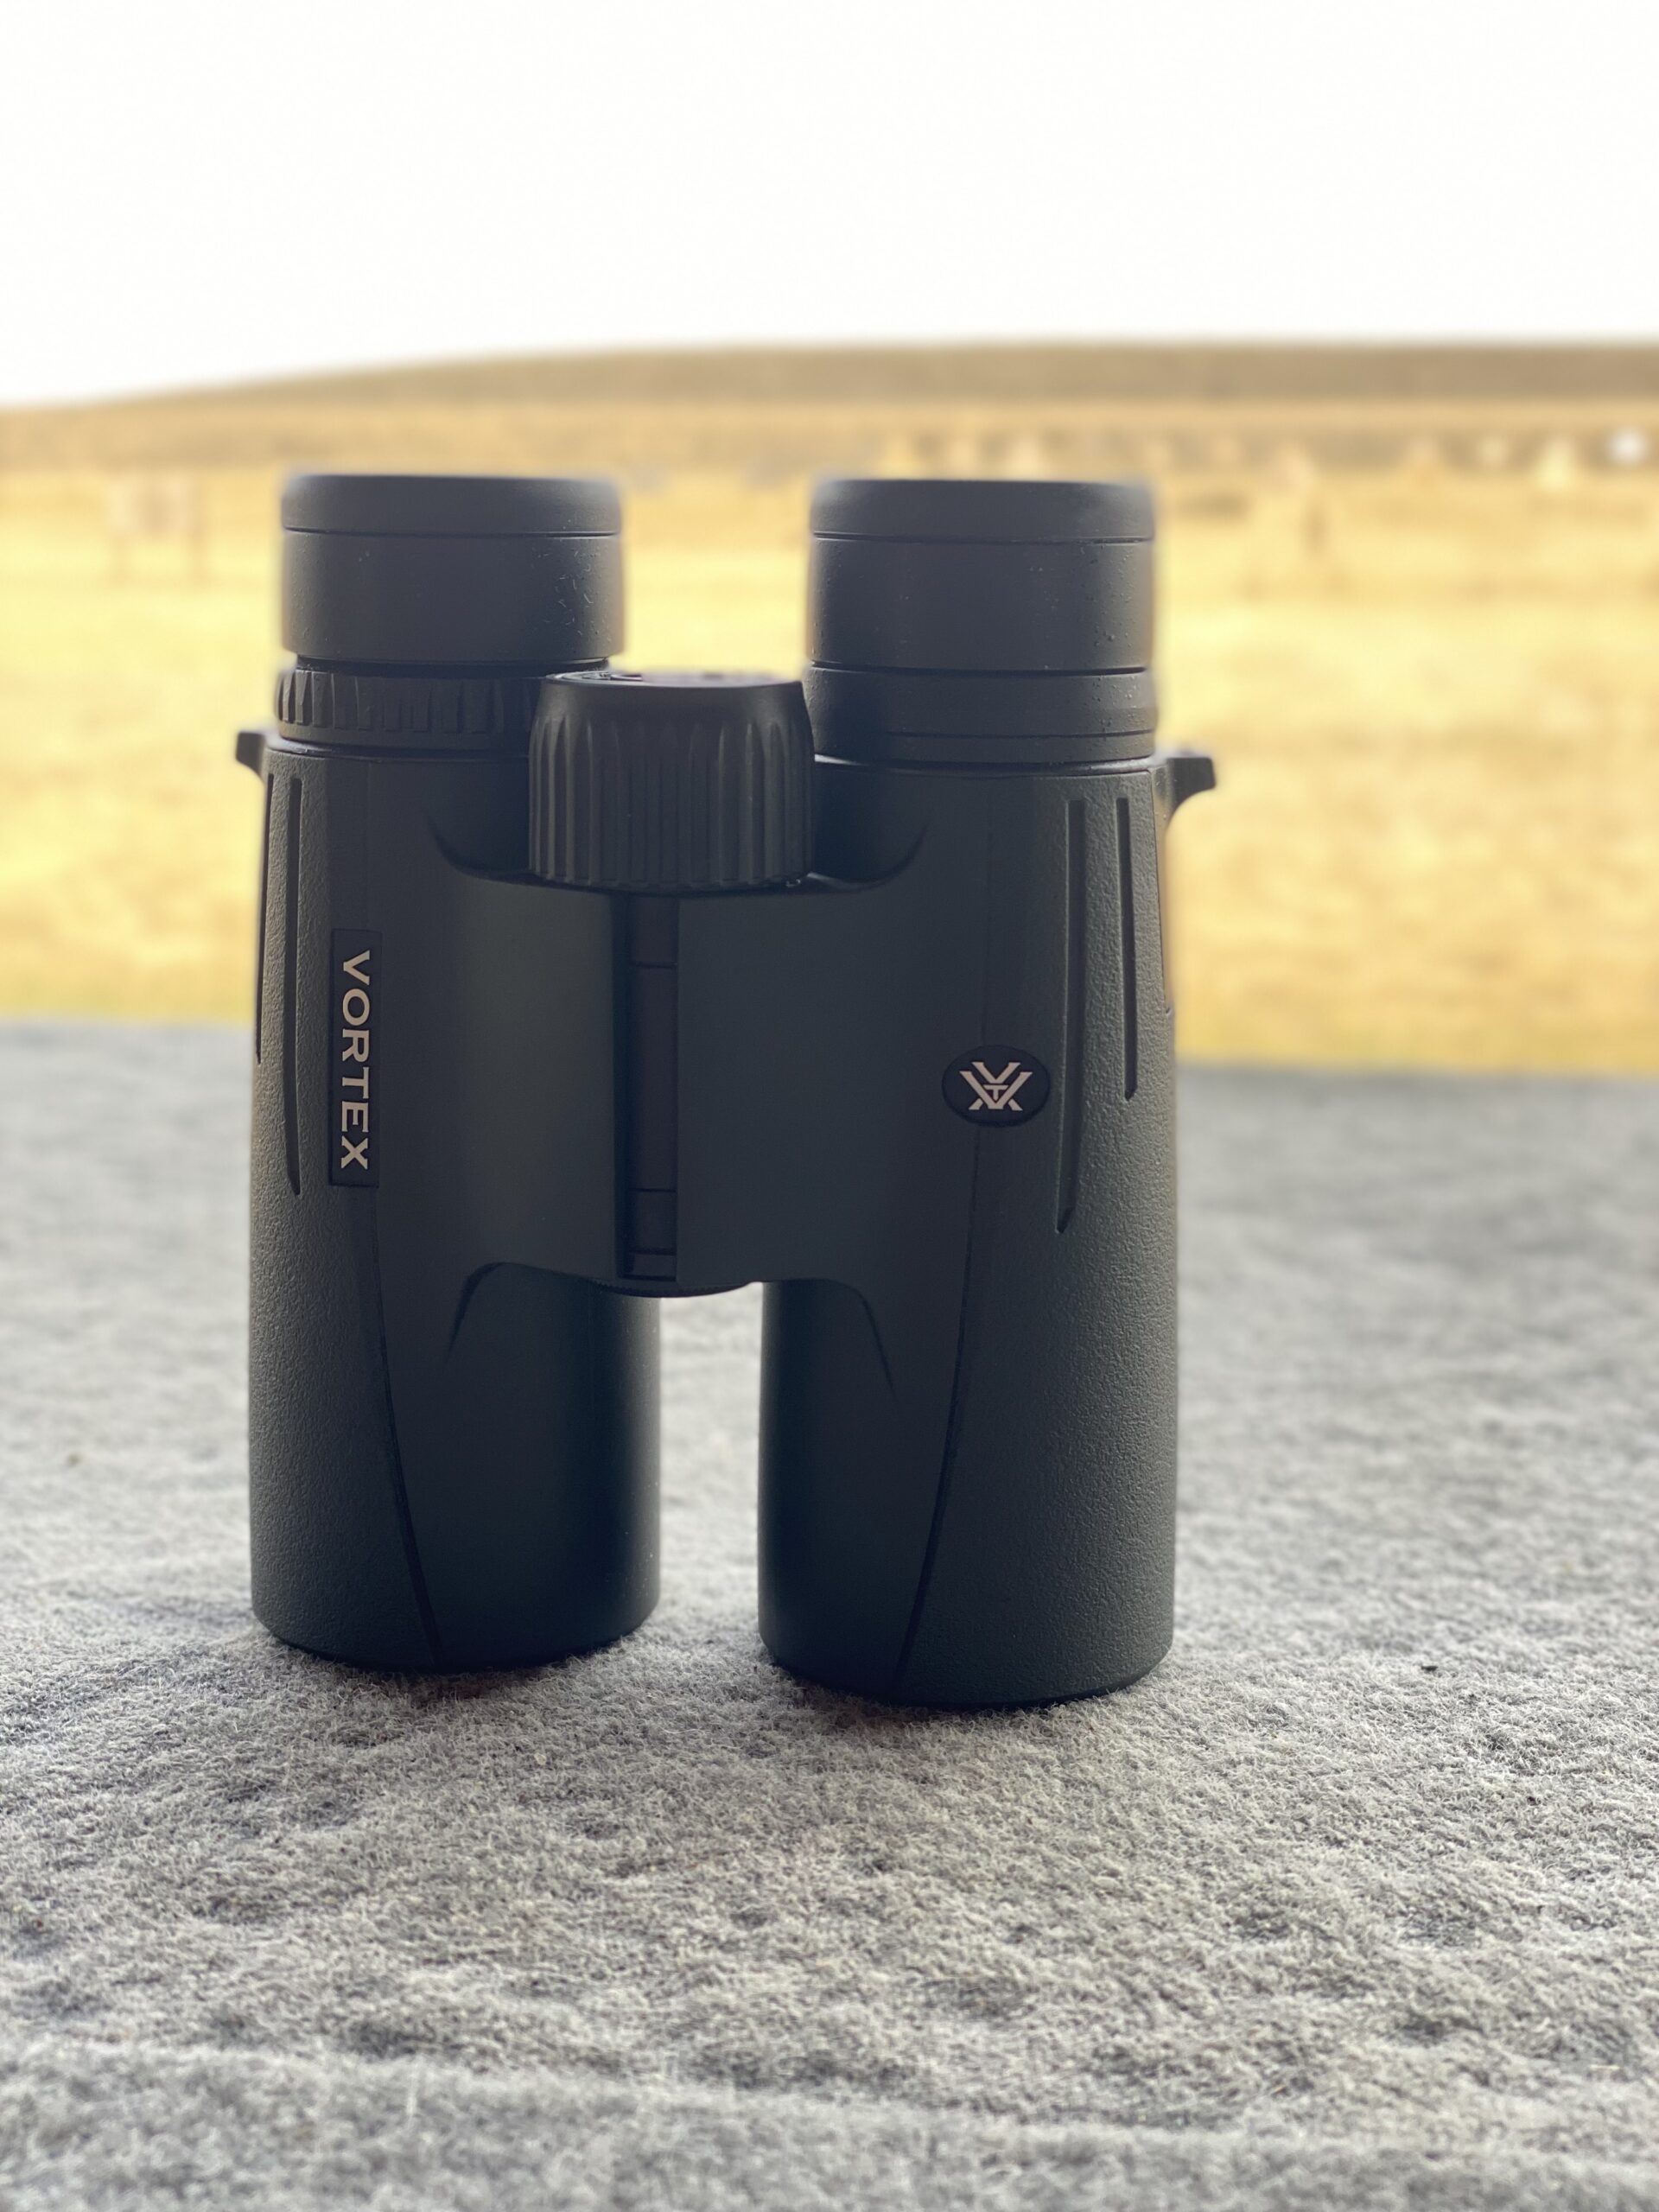 Viper HD compact binoculars